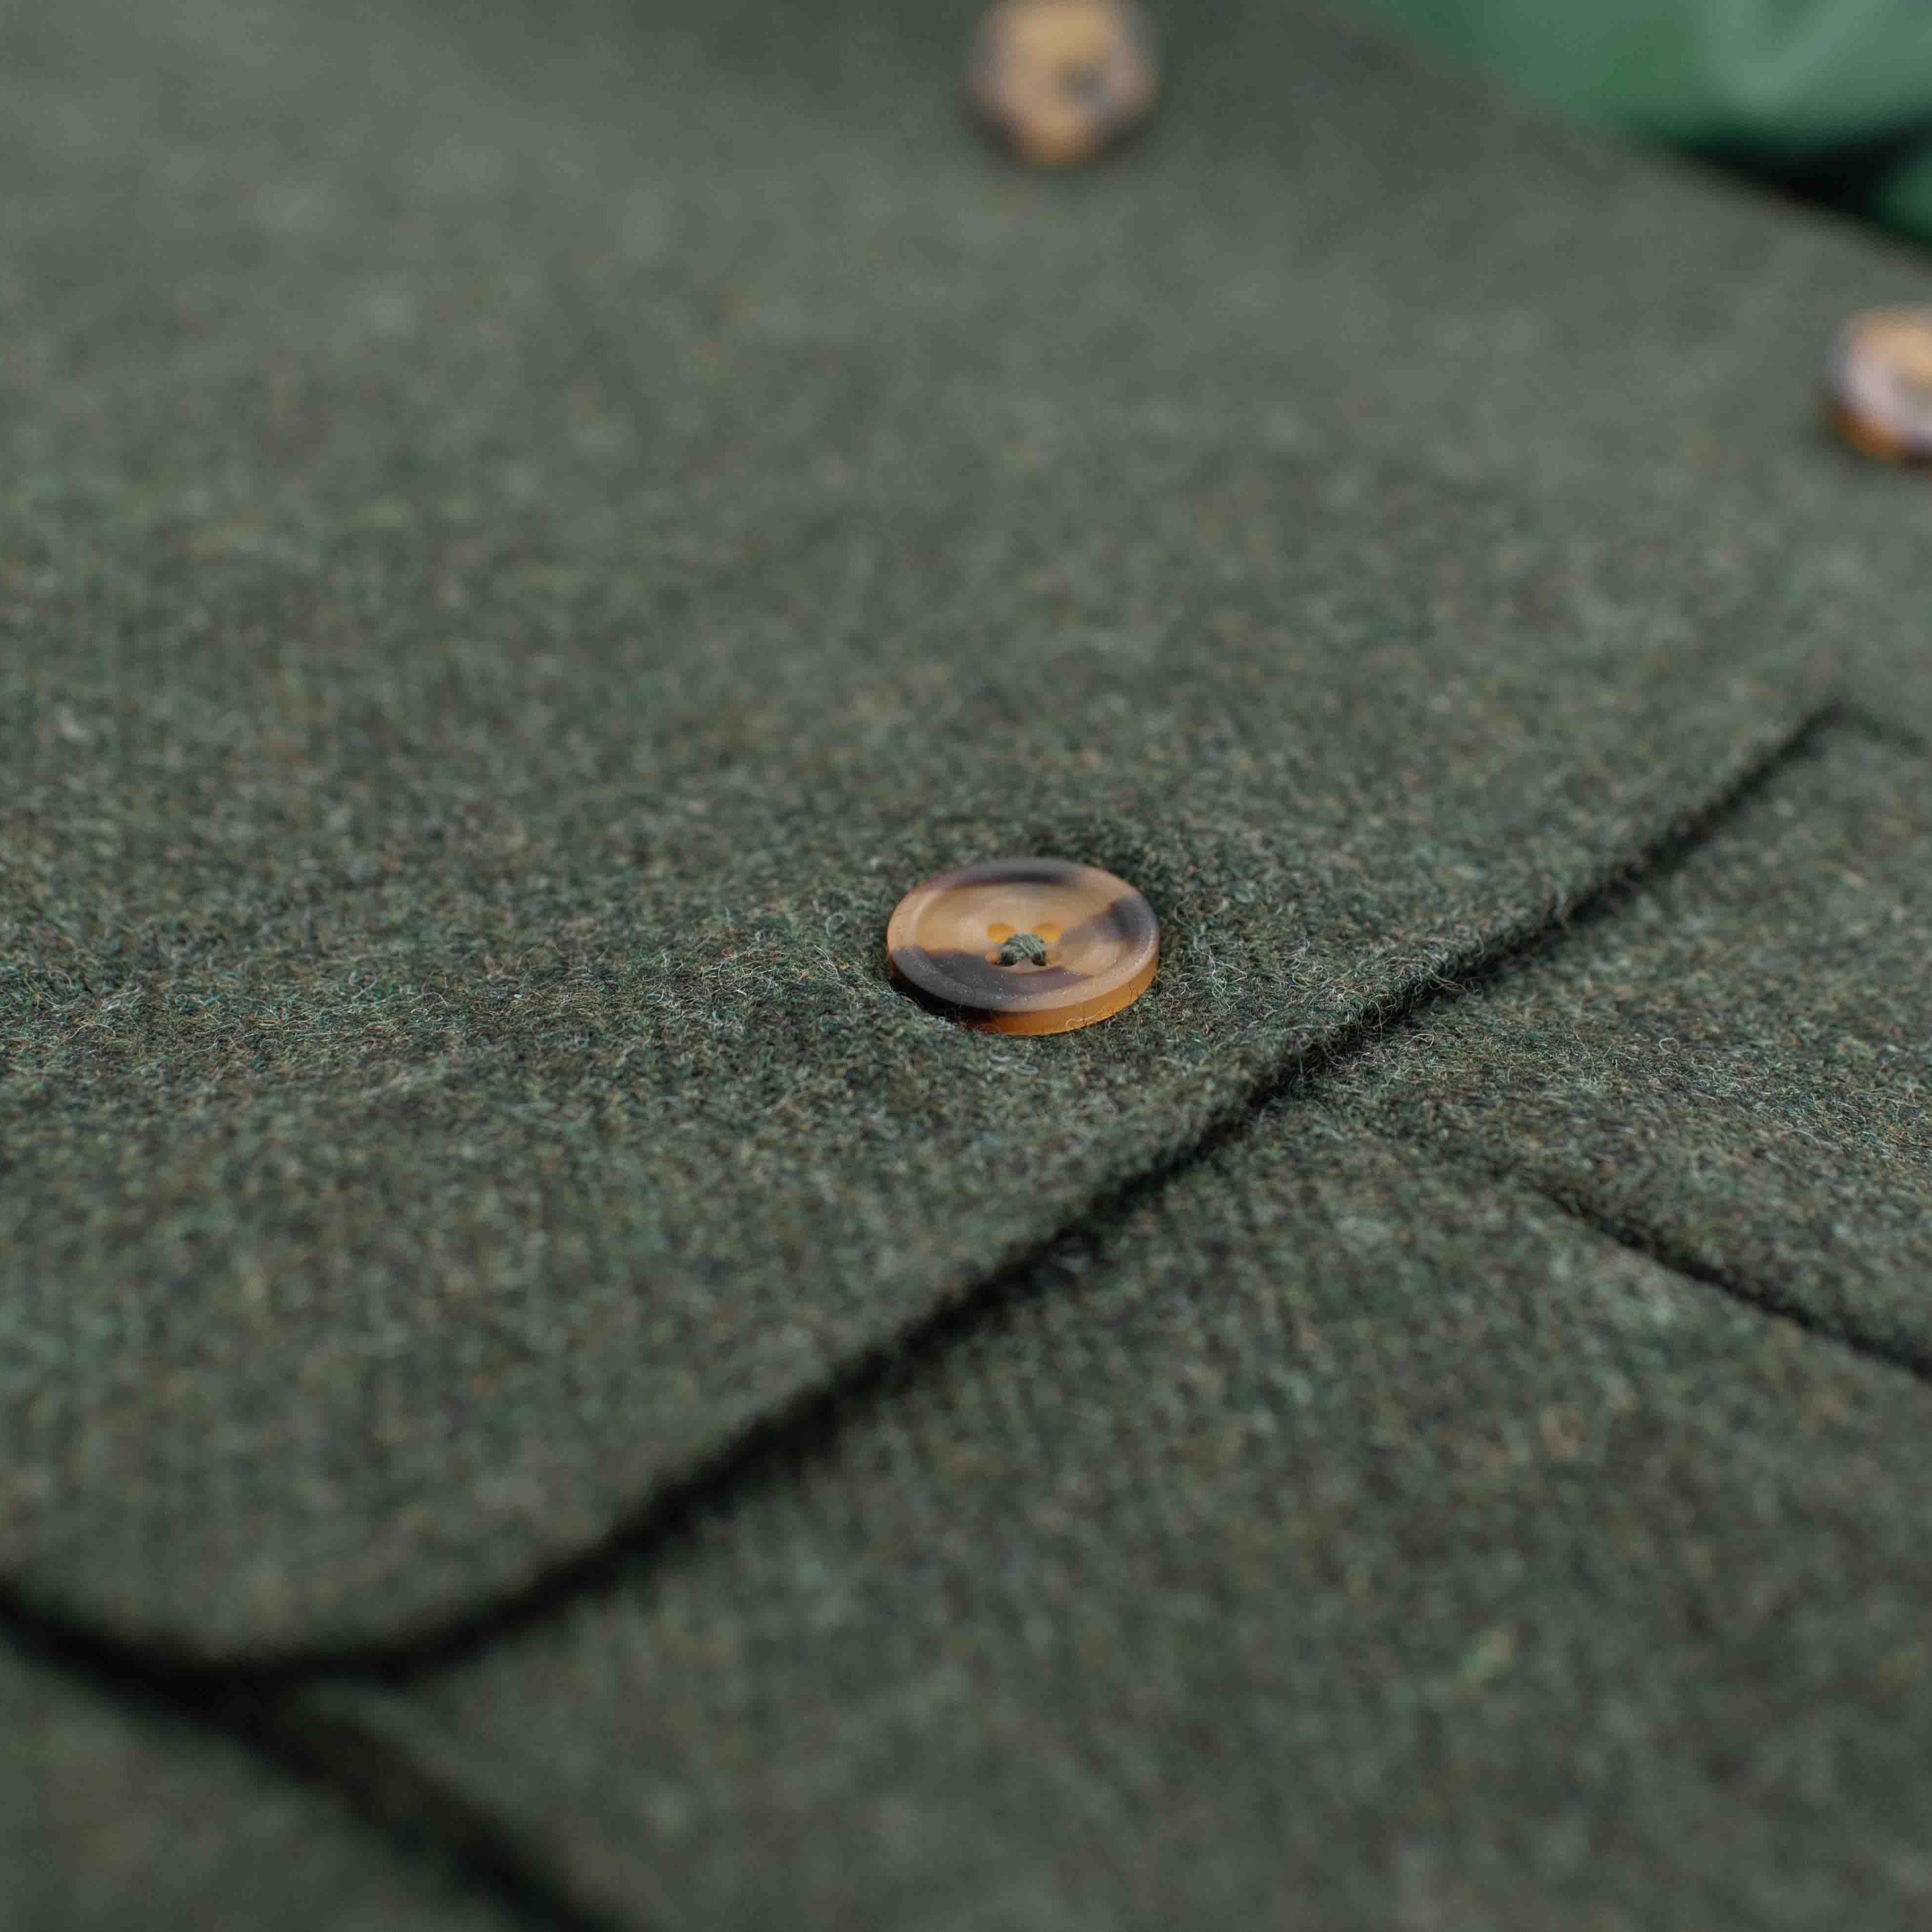 Fox Tweed Forest Green Twill Waistcoat